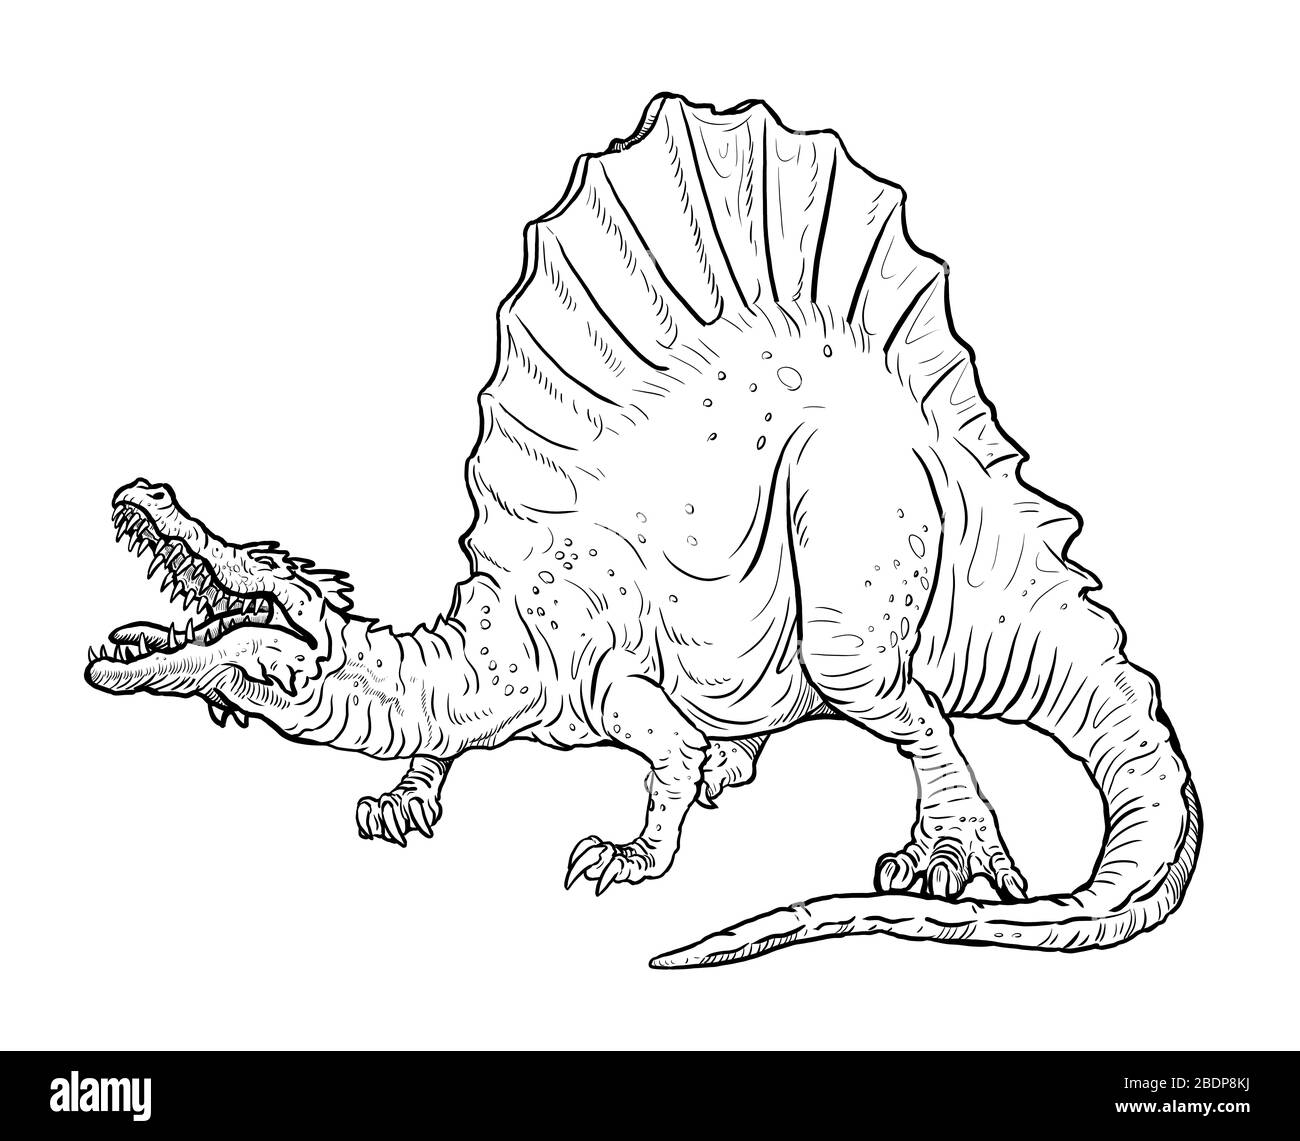 Indoraptor Colored Pencil Drawing | Jurassic World by AmongSakura on  DeviantArt